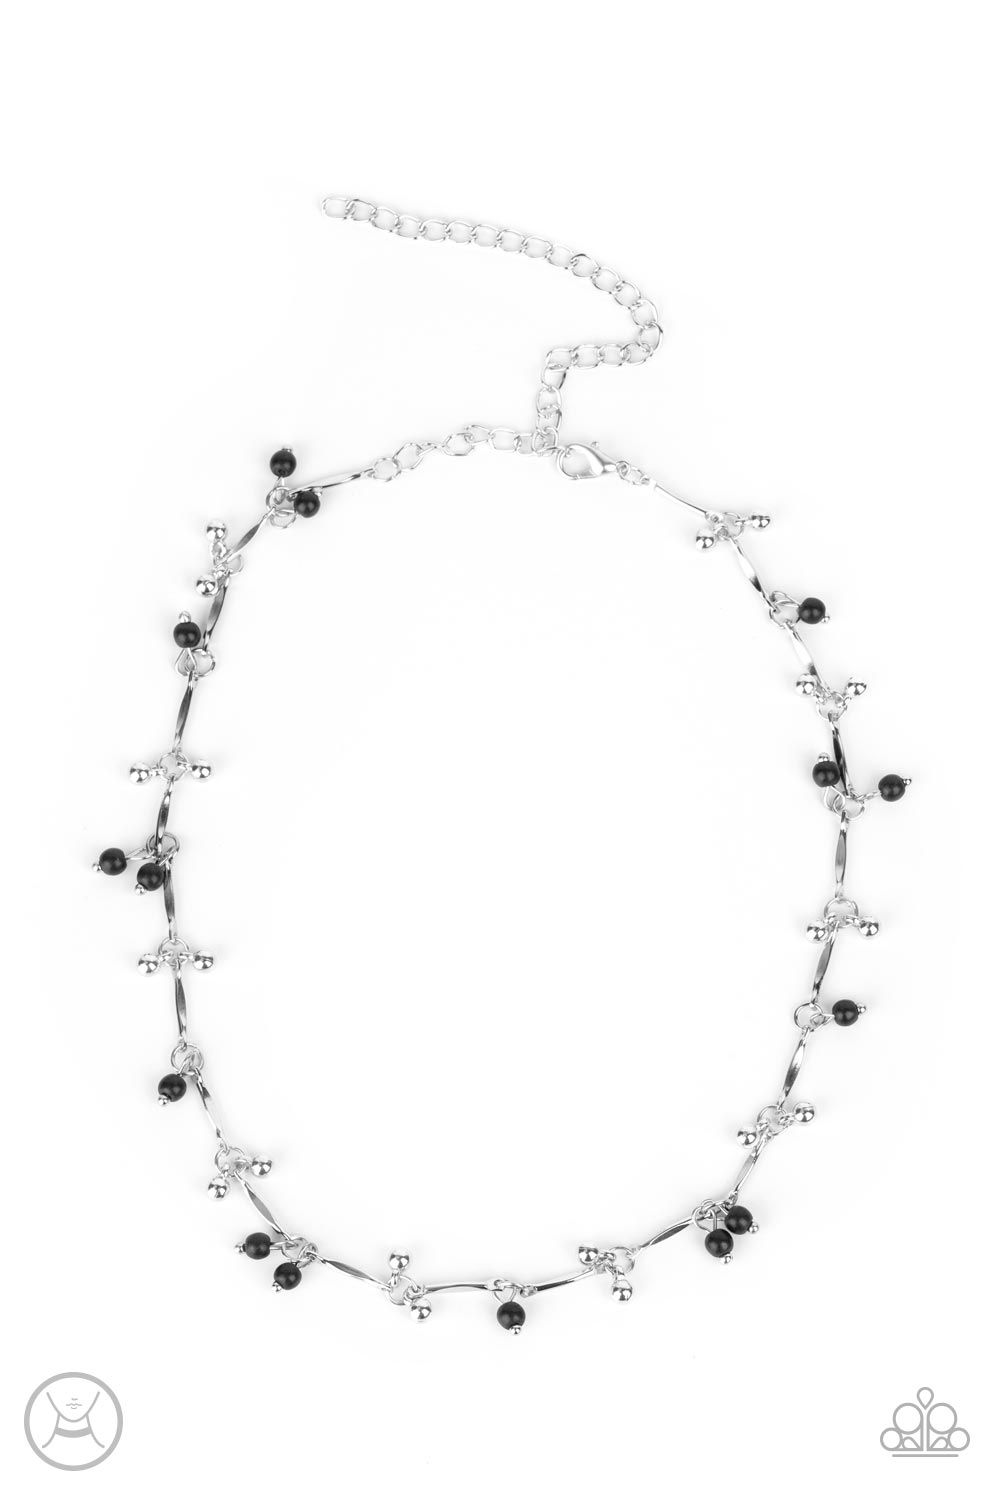 Sahara Social - Black Necklace freeshipping - JewLz4u Gemstone Gallery